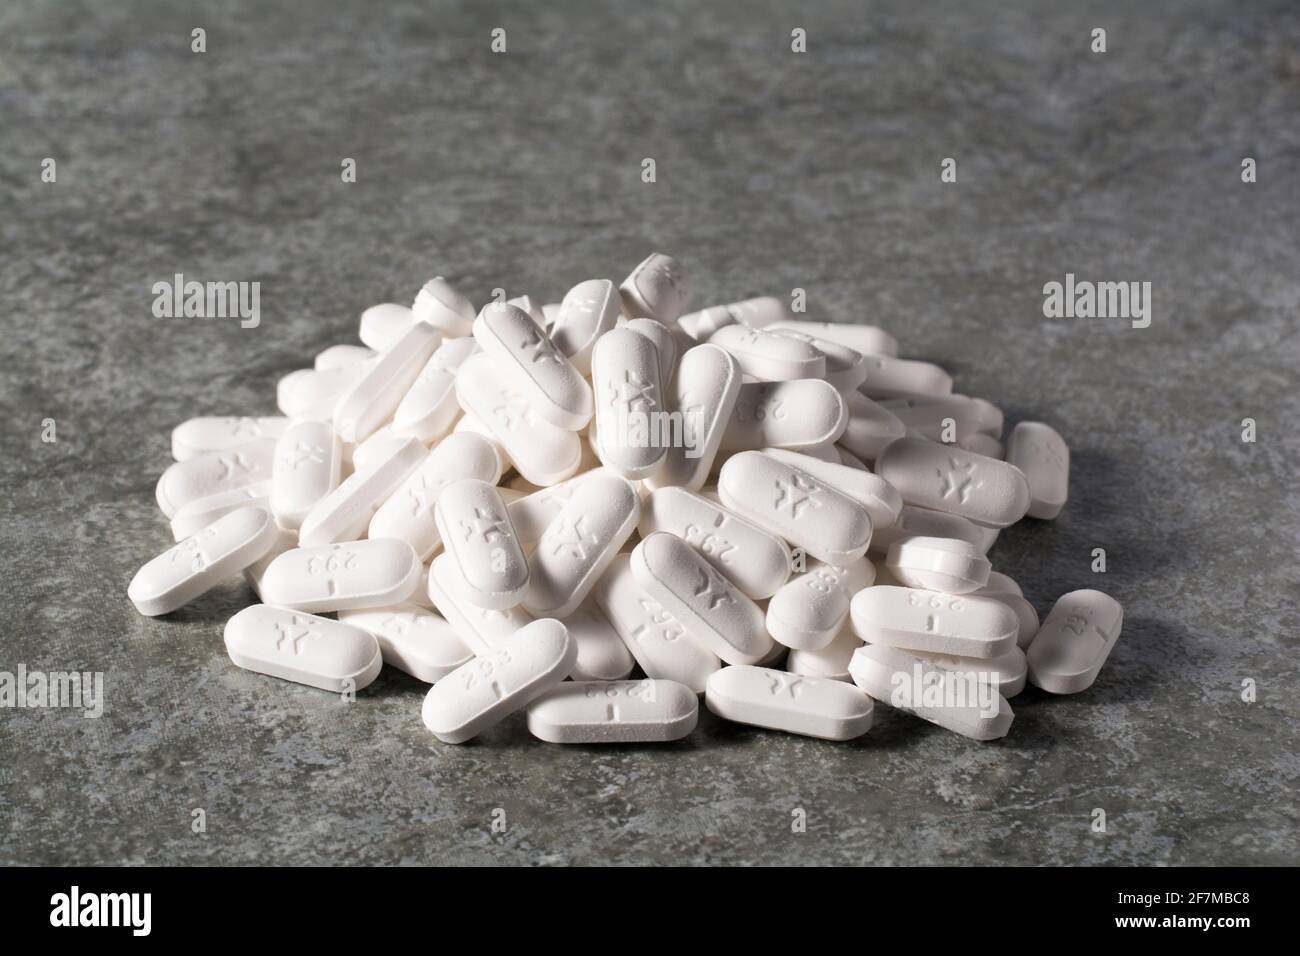 A pile of white pills Stock Photo